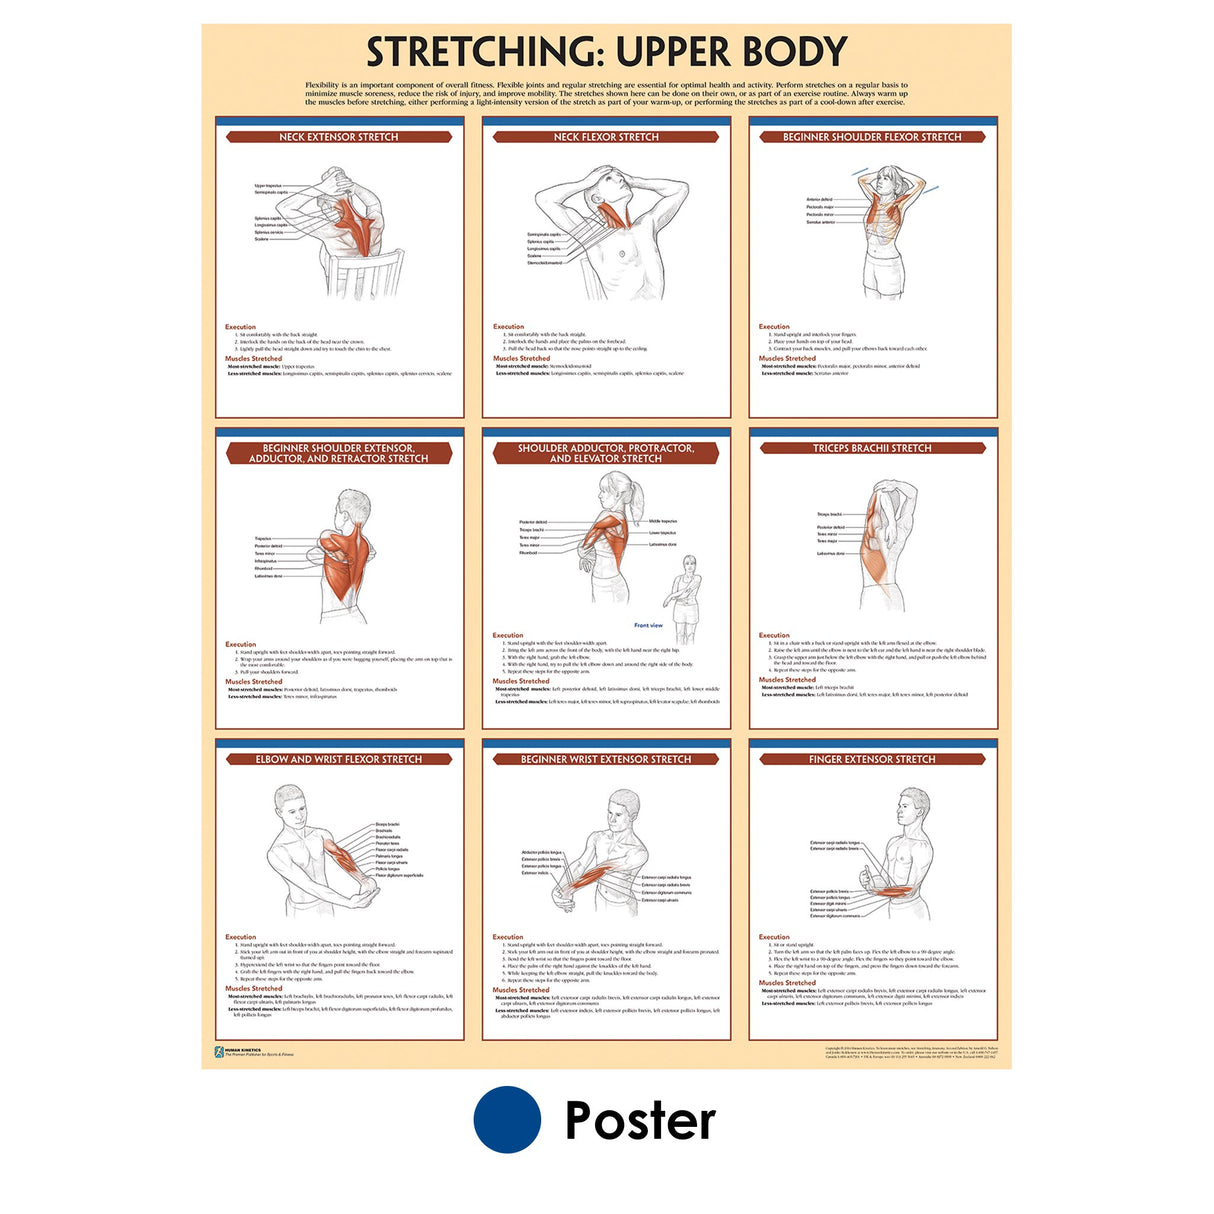 Stretching Poster: Upper Body